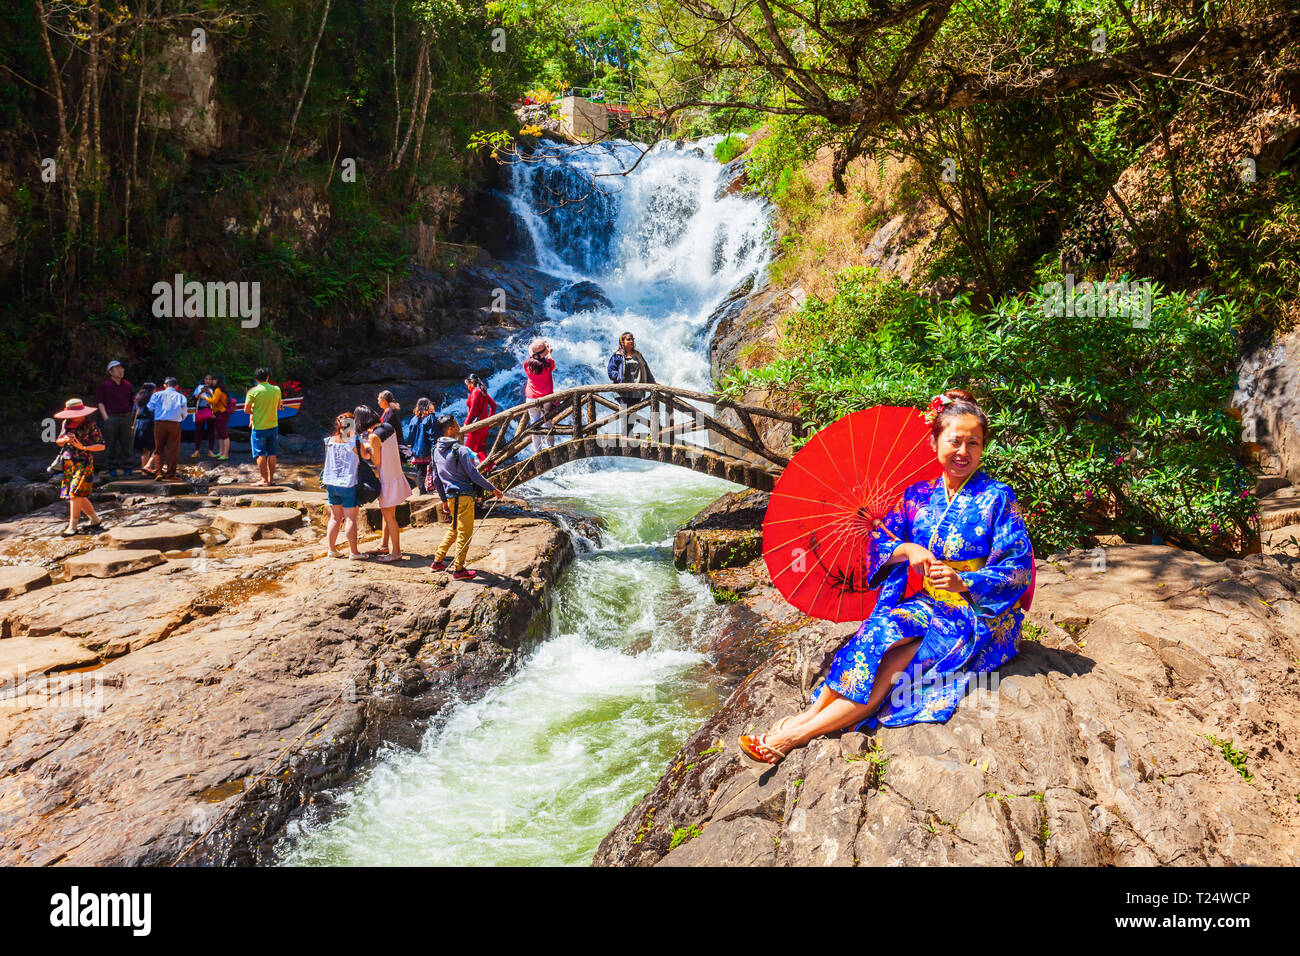 DALAT, VIETNAM - 12. MÄRZ 2018: Datanla Waterfall In der Nähe der Stadt in Vietnam Dalat Stockfoto